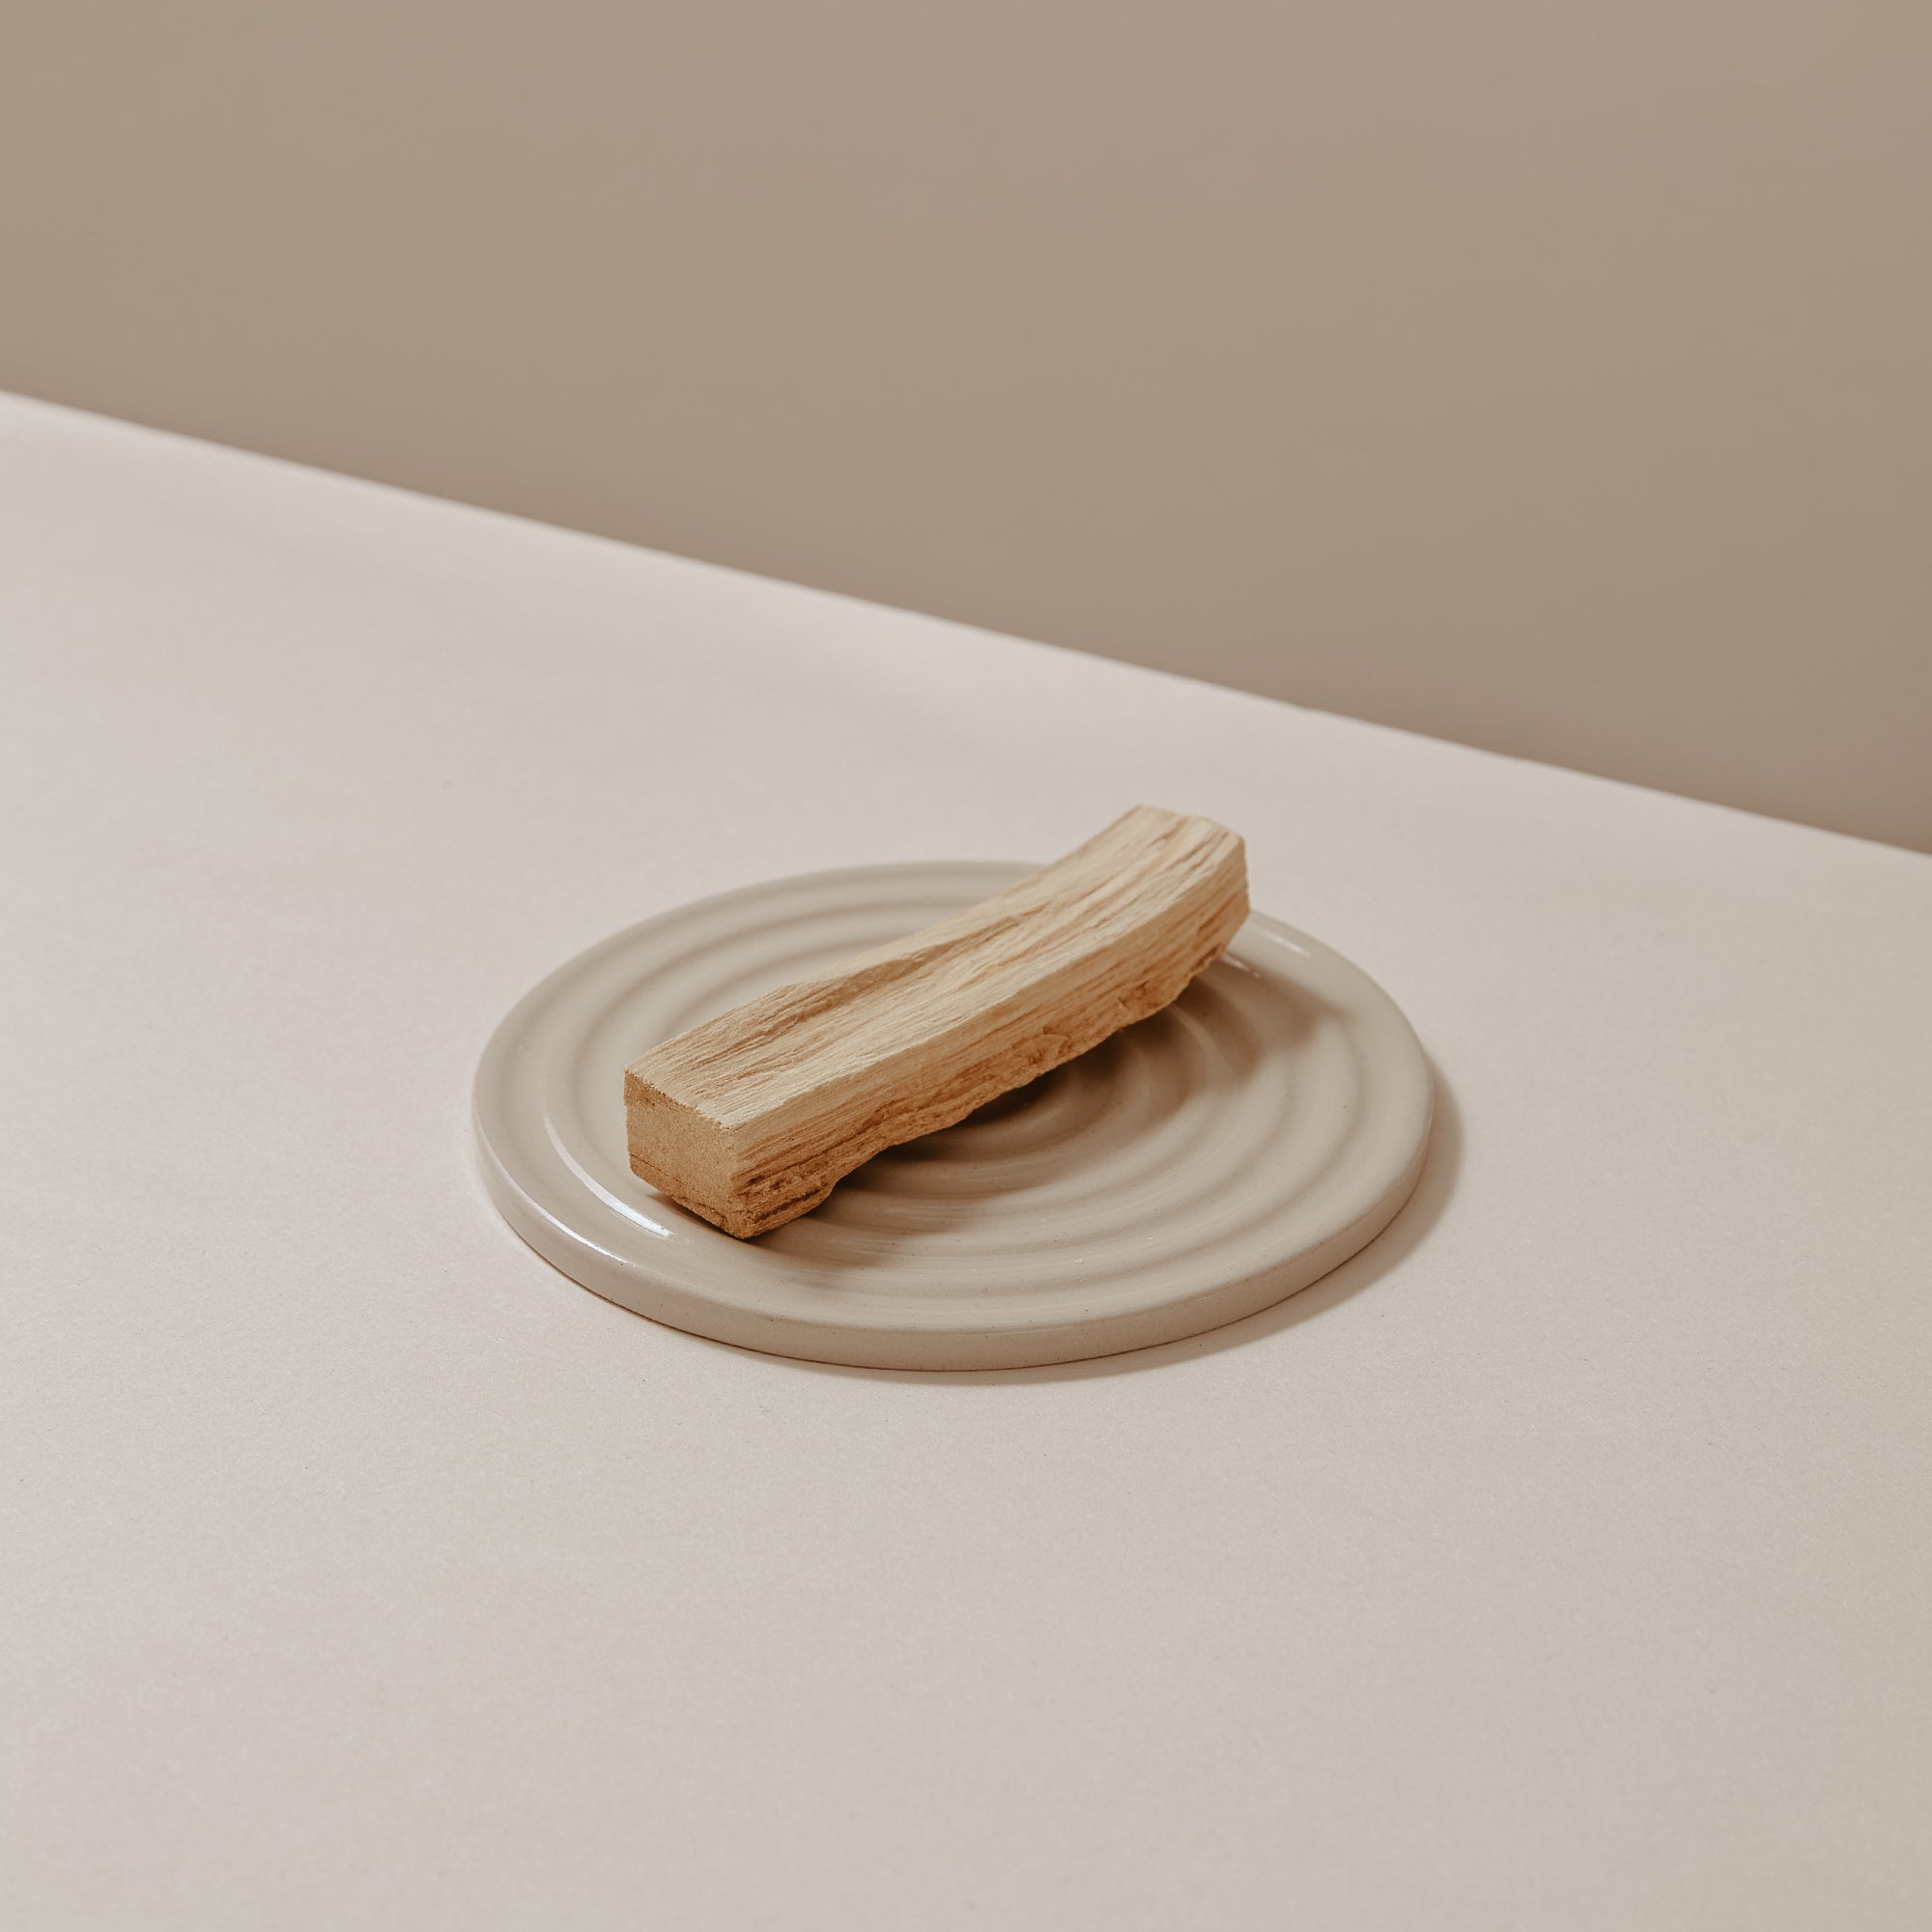 smudge stick plate handmade ceramics clai studio Berlin Prenzlauer Berg